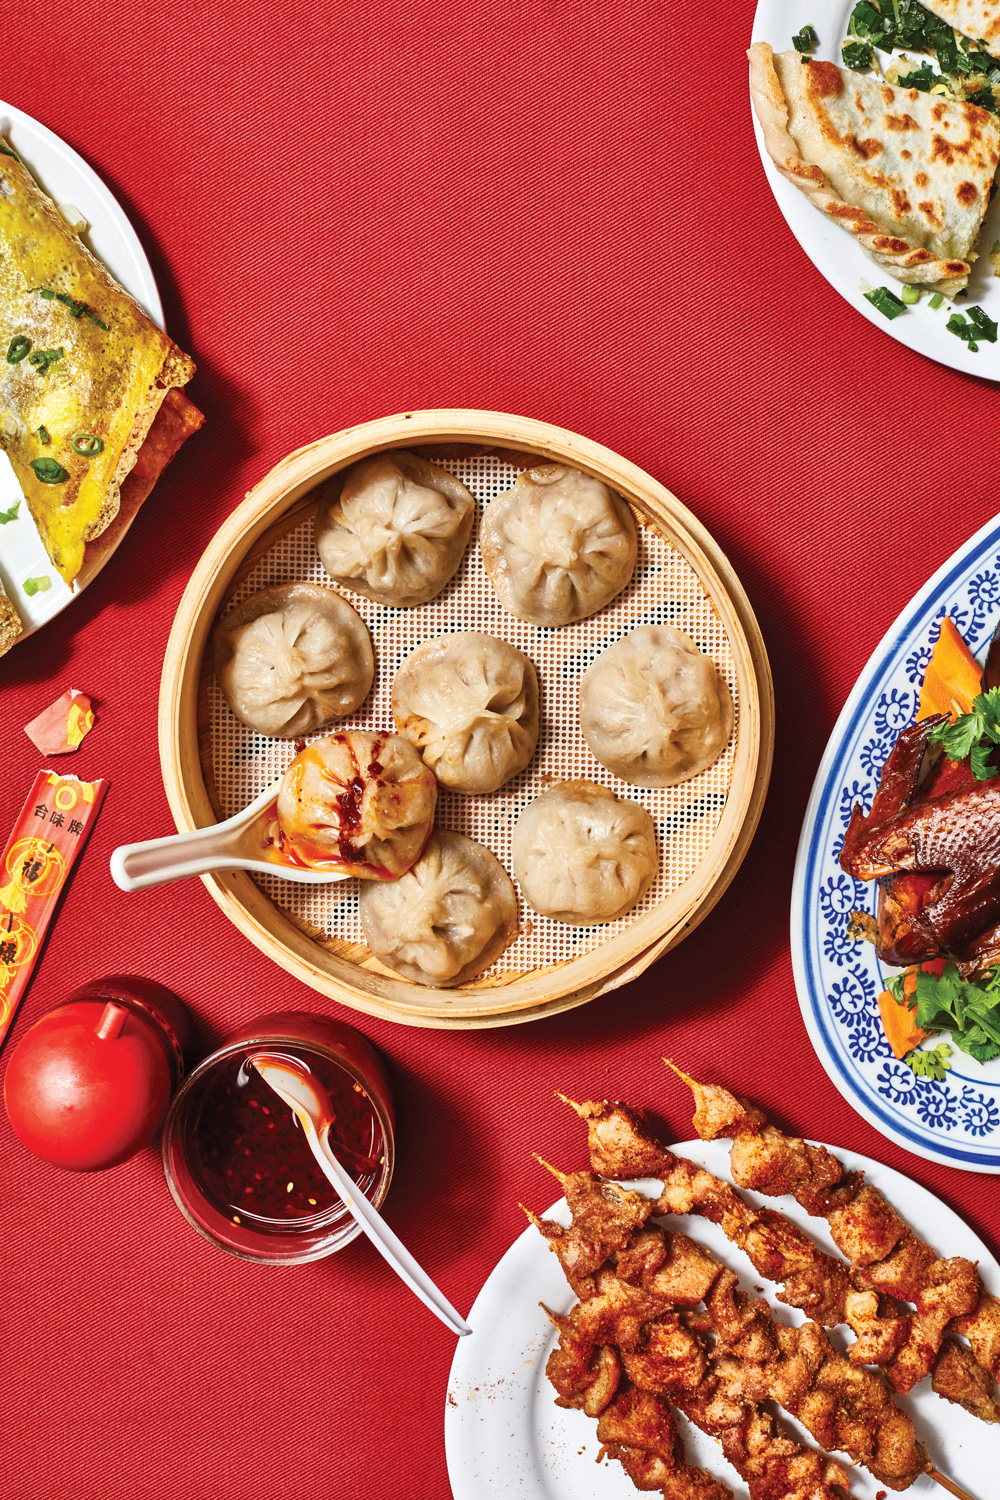 75 Best Restaurants in Atlanta: Northern China Eatery